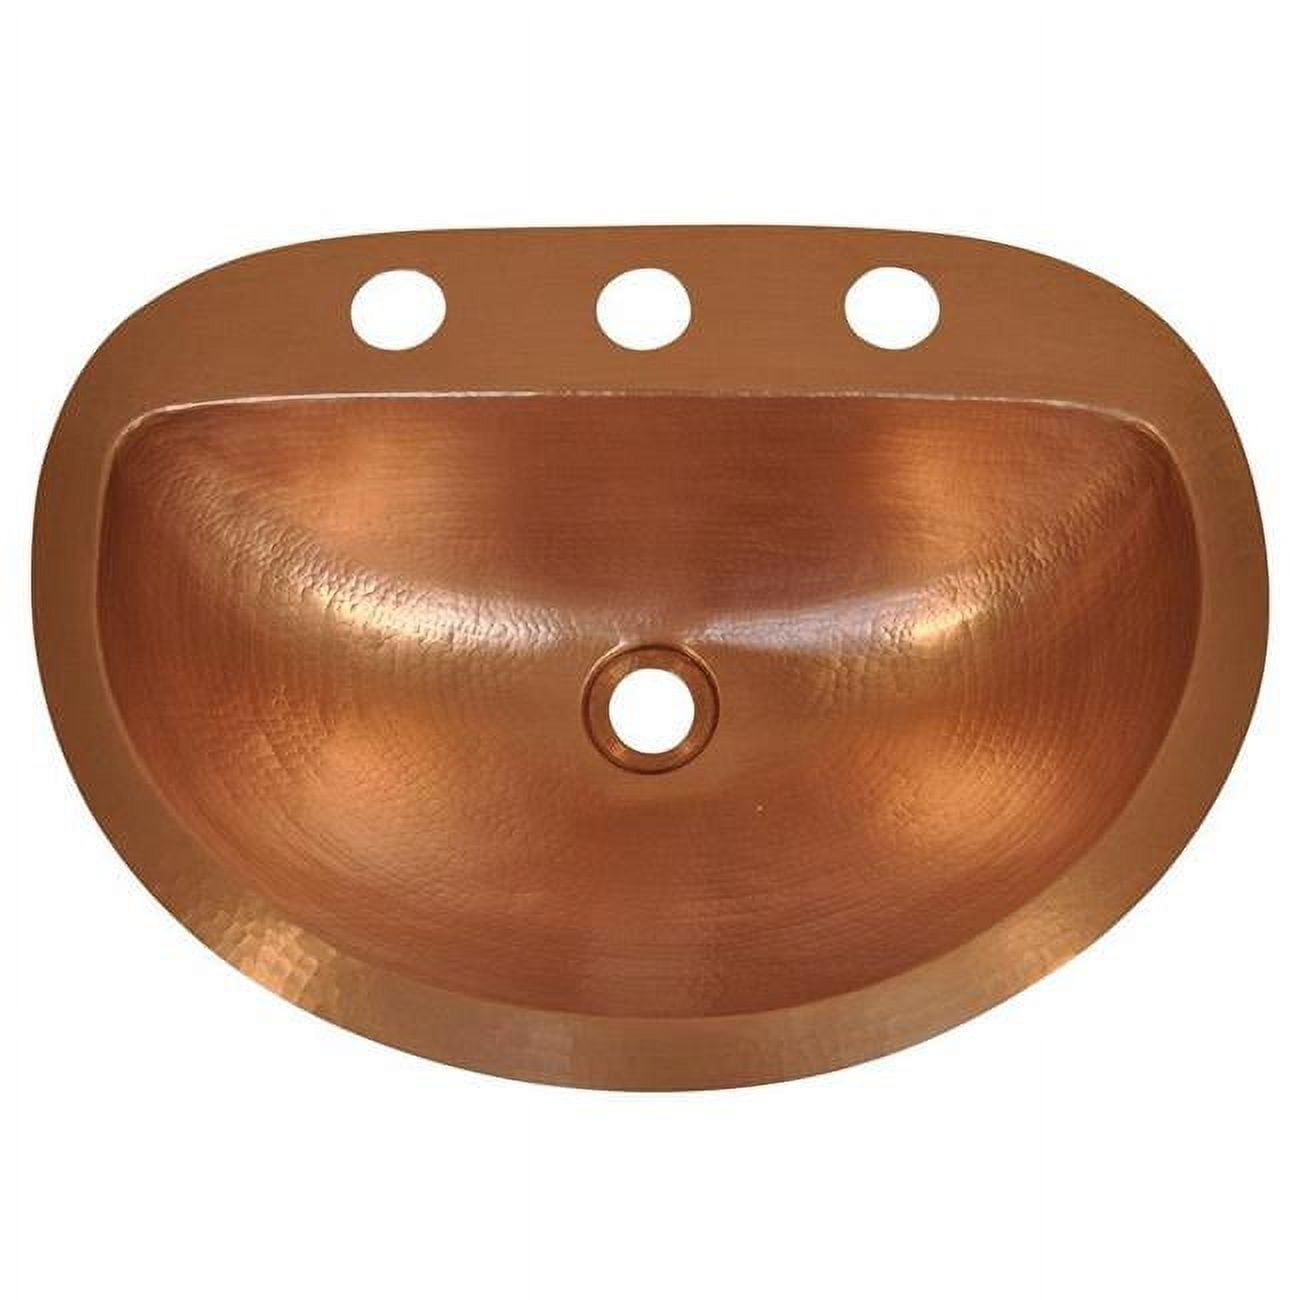 Cos-dg-19-dl Copper Oval Vessel Sink, Dark Light - Durango Design - 6 X 17 X 19 In.